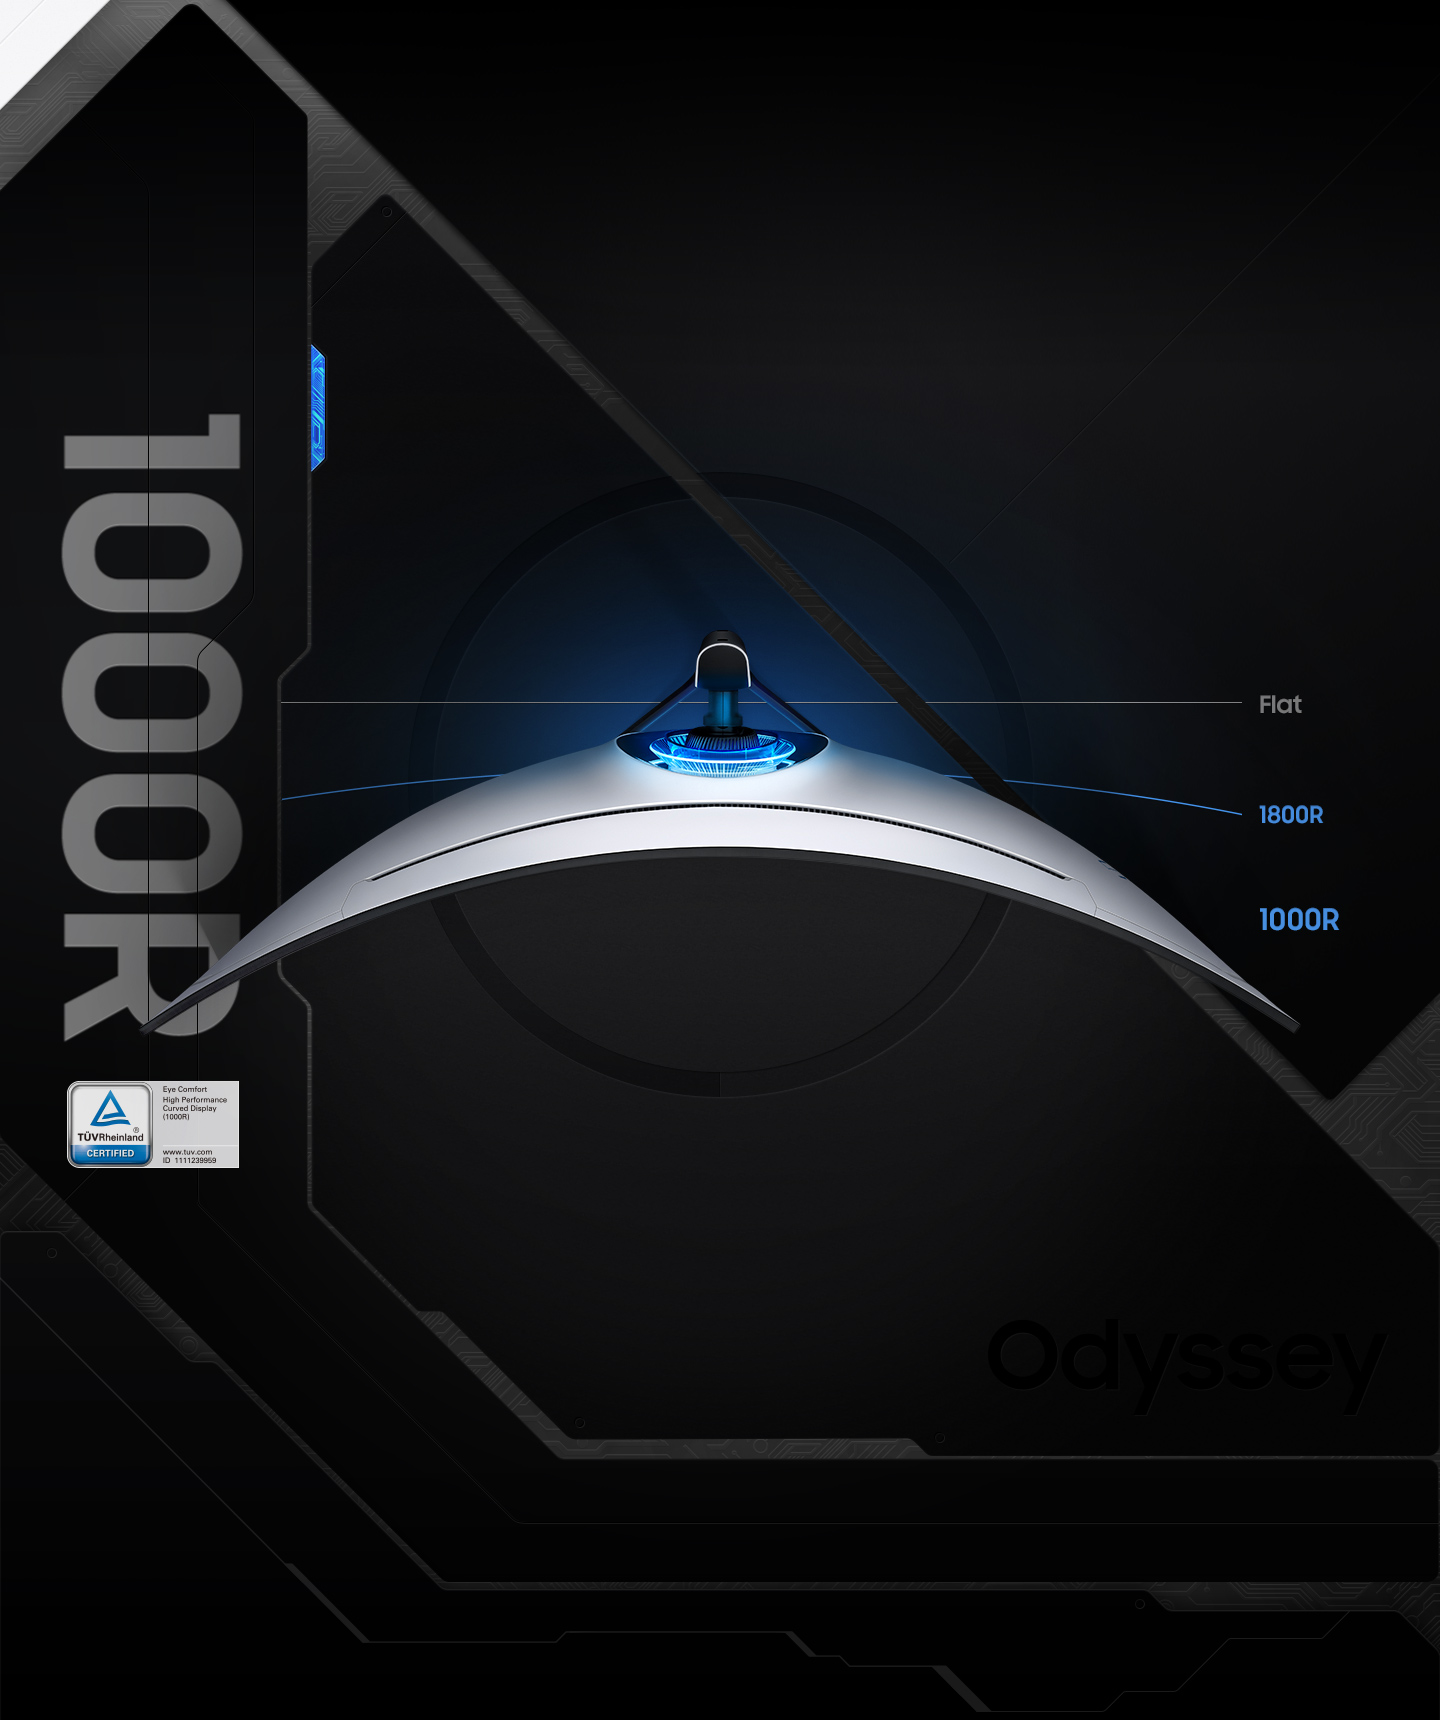 Samsung’s biggest 1000R gaming monitor